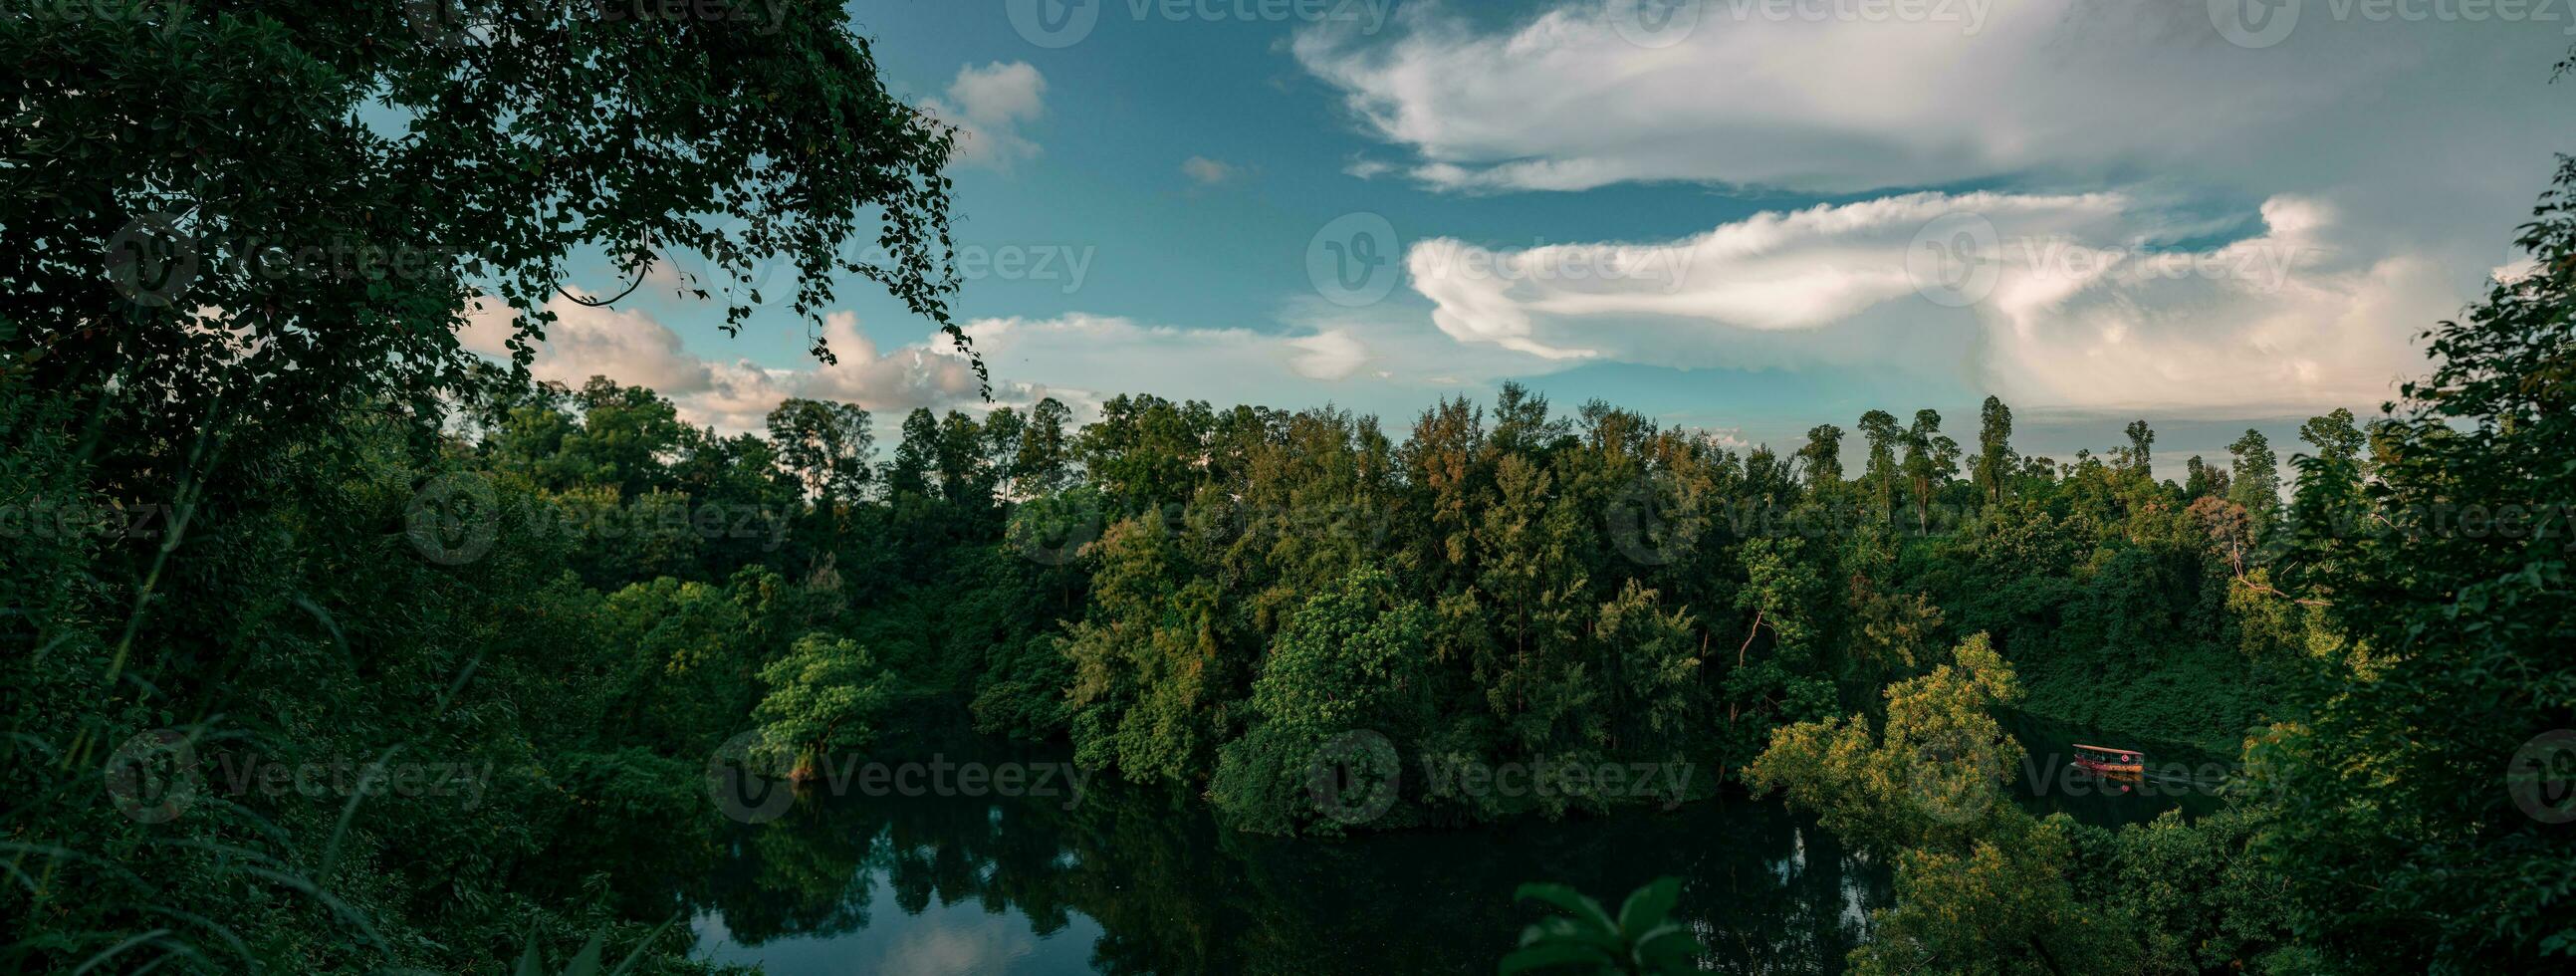 Foy's lake panoramic view photo